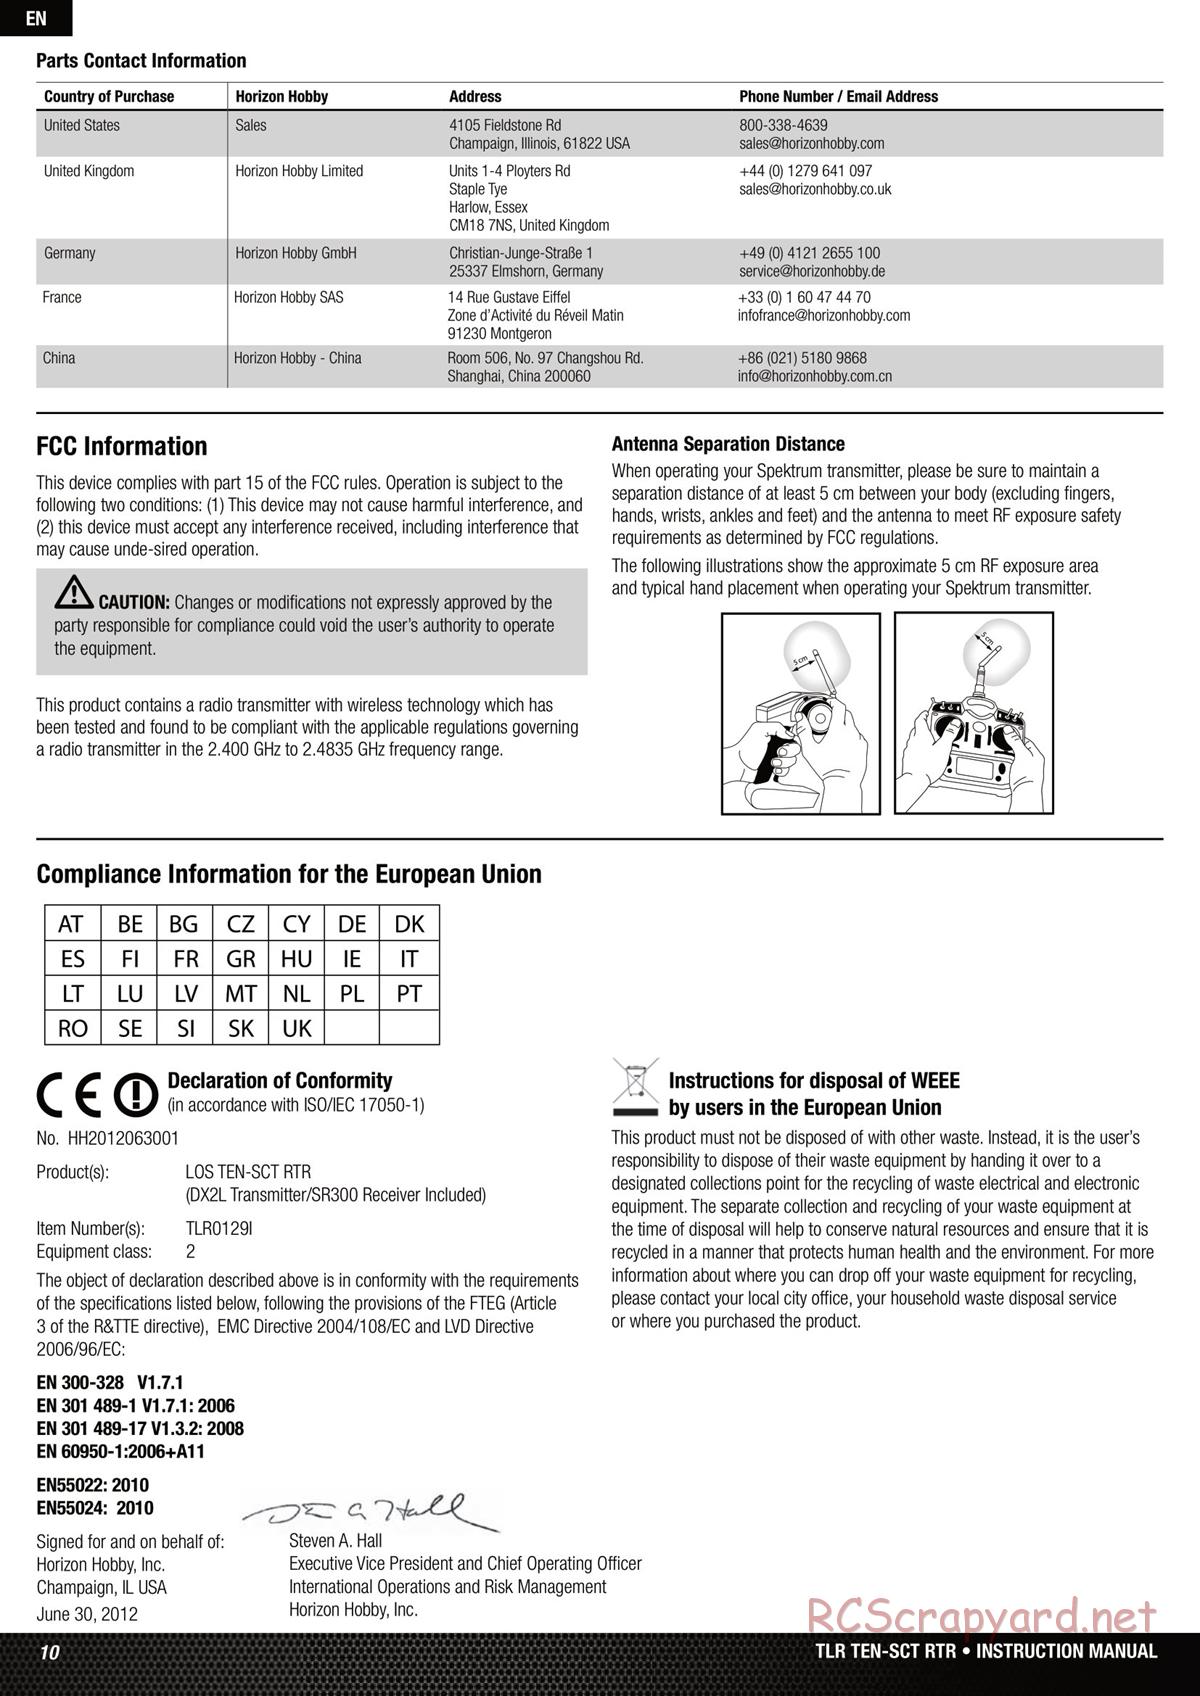 Team Losi - Ten SCT Nitro - Manual - Page 10